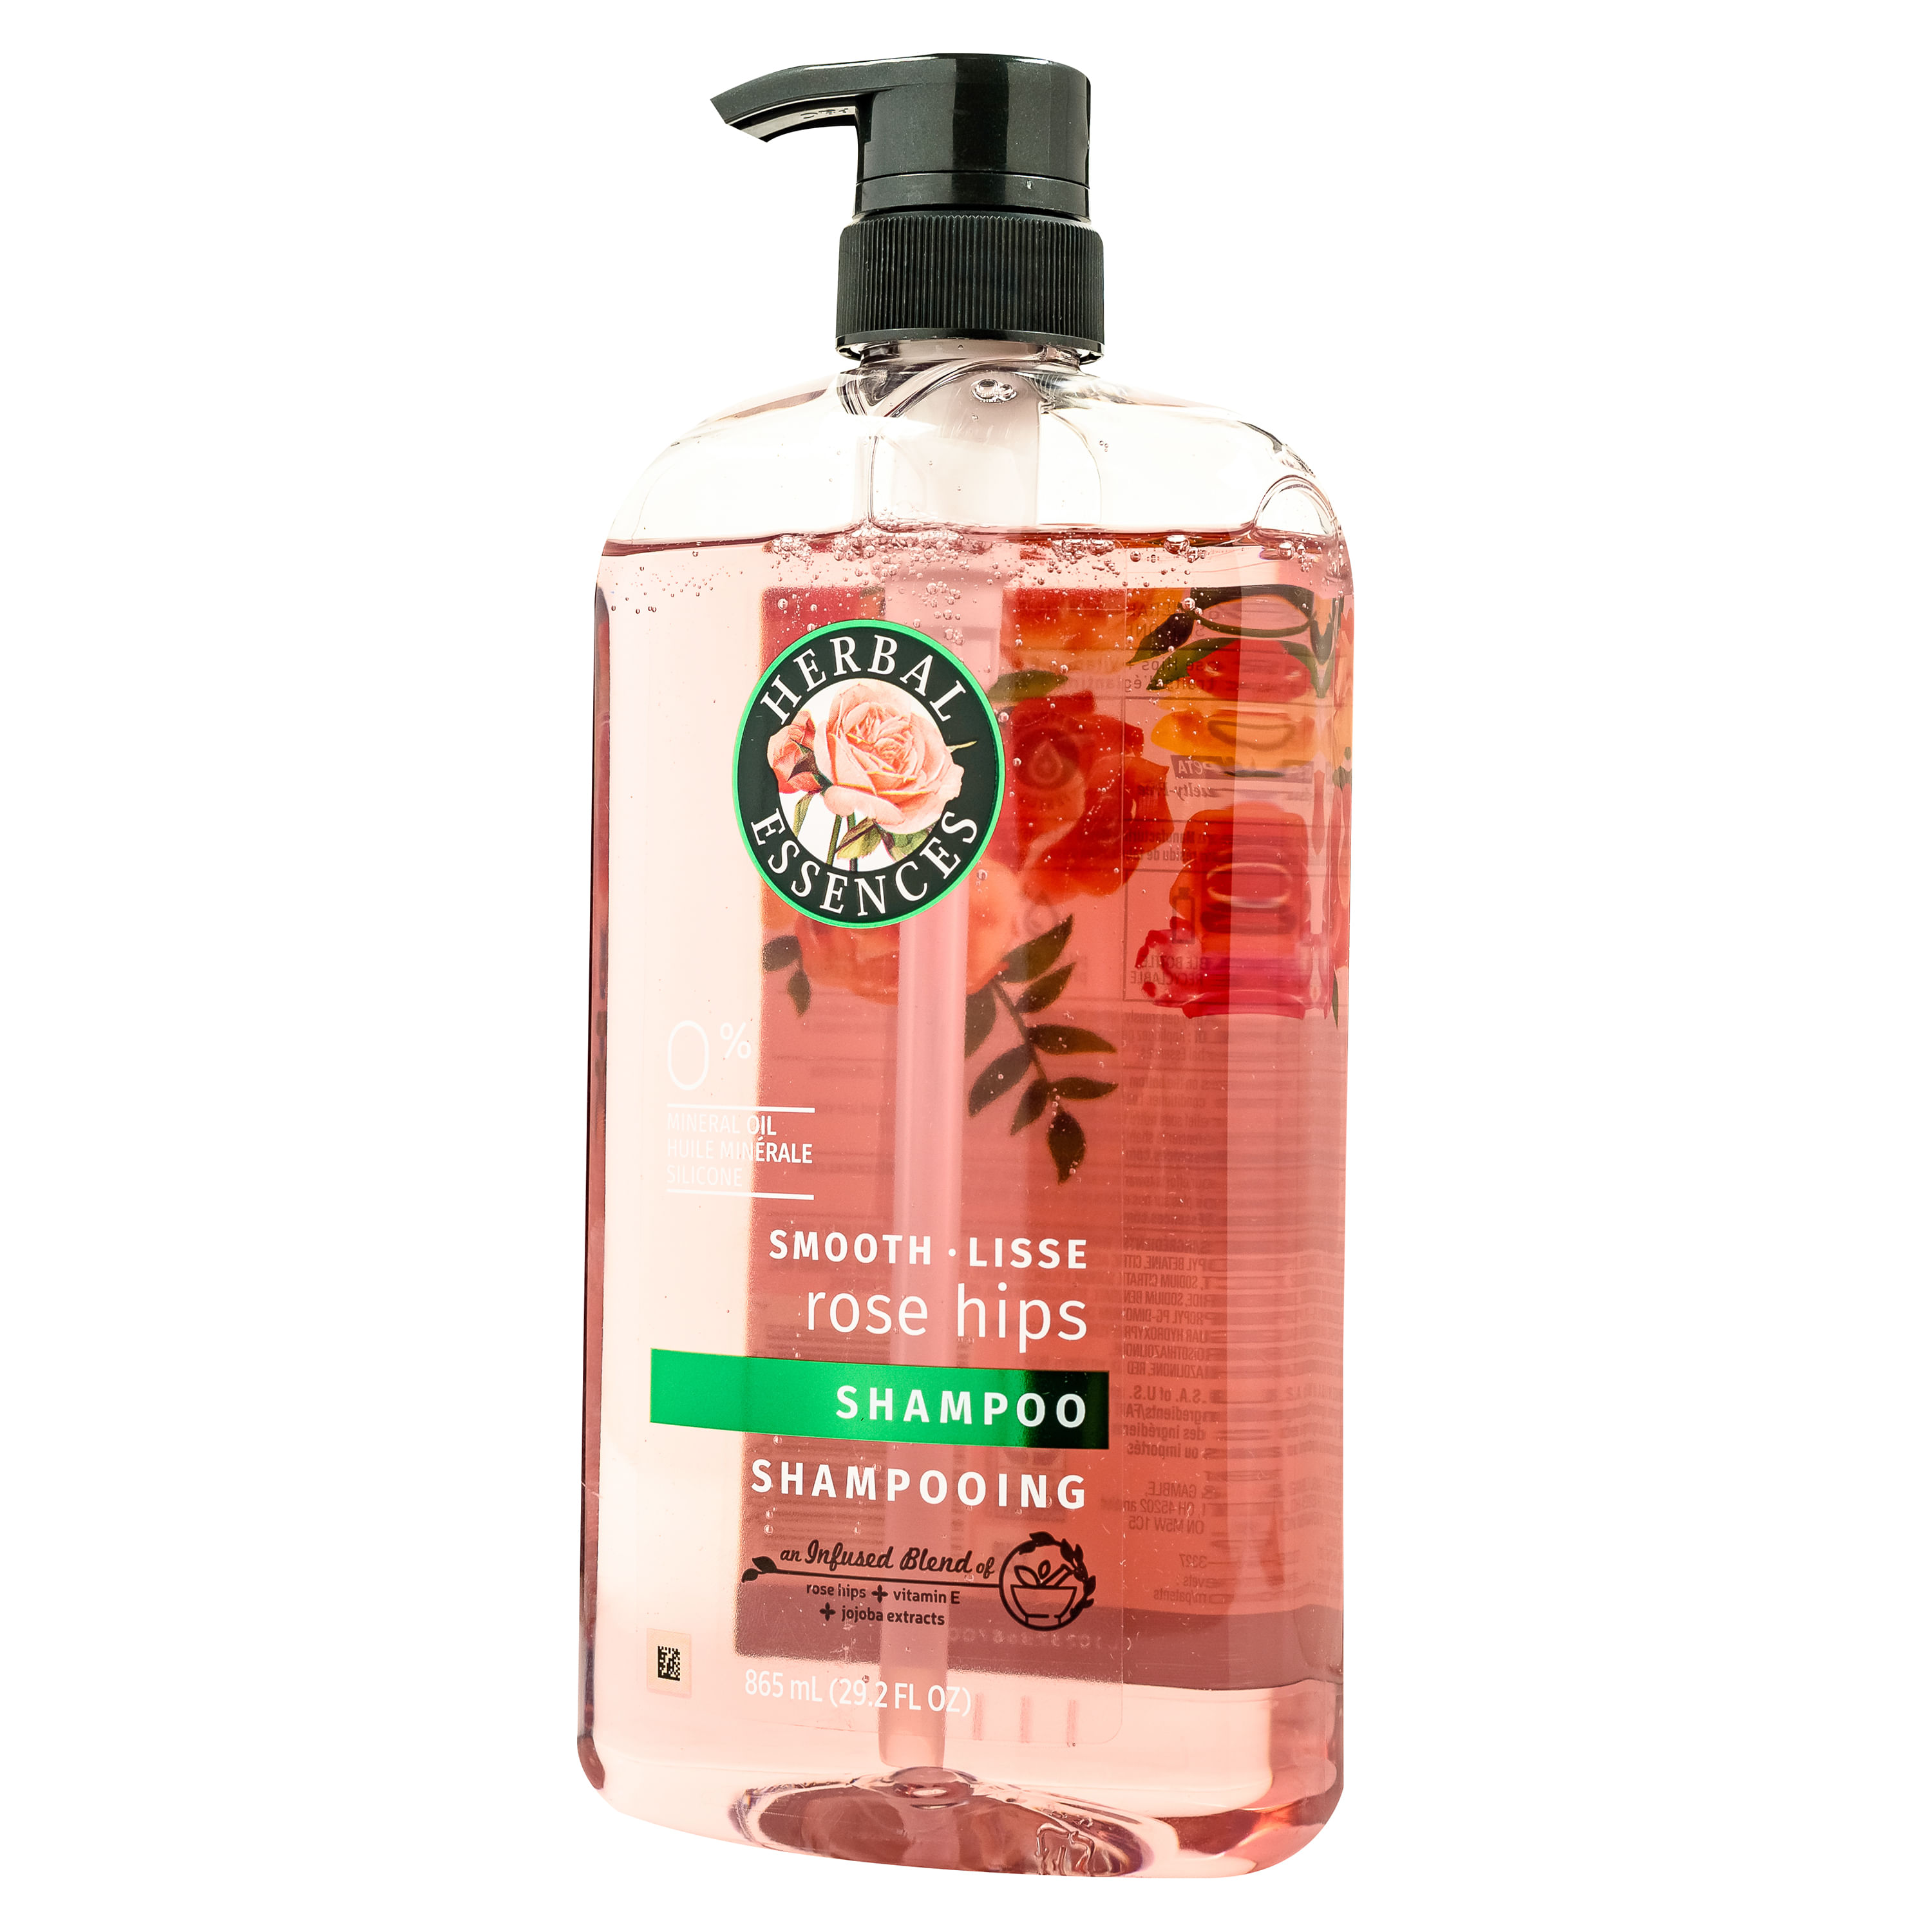 Shampoo Smooth Petalos Herbal Essences 865 ml